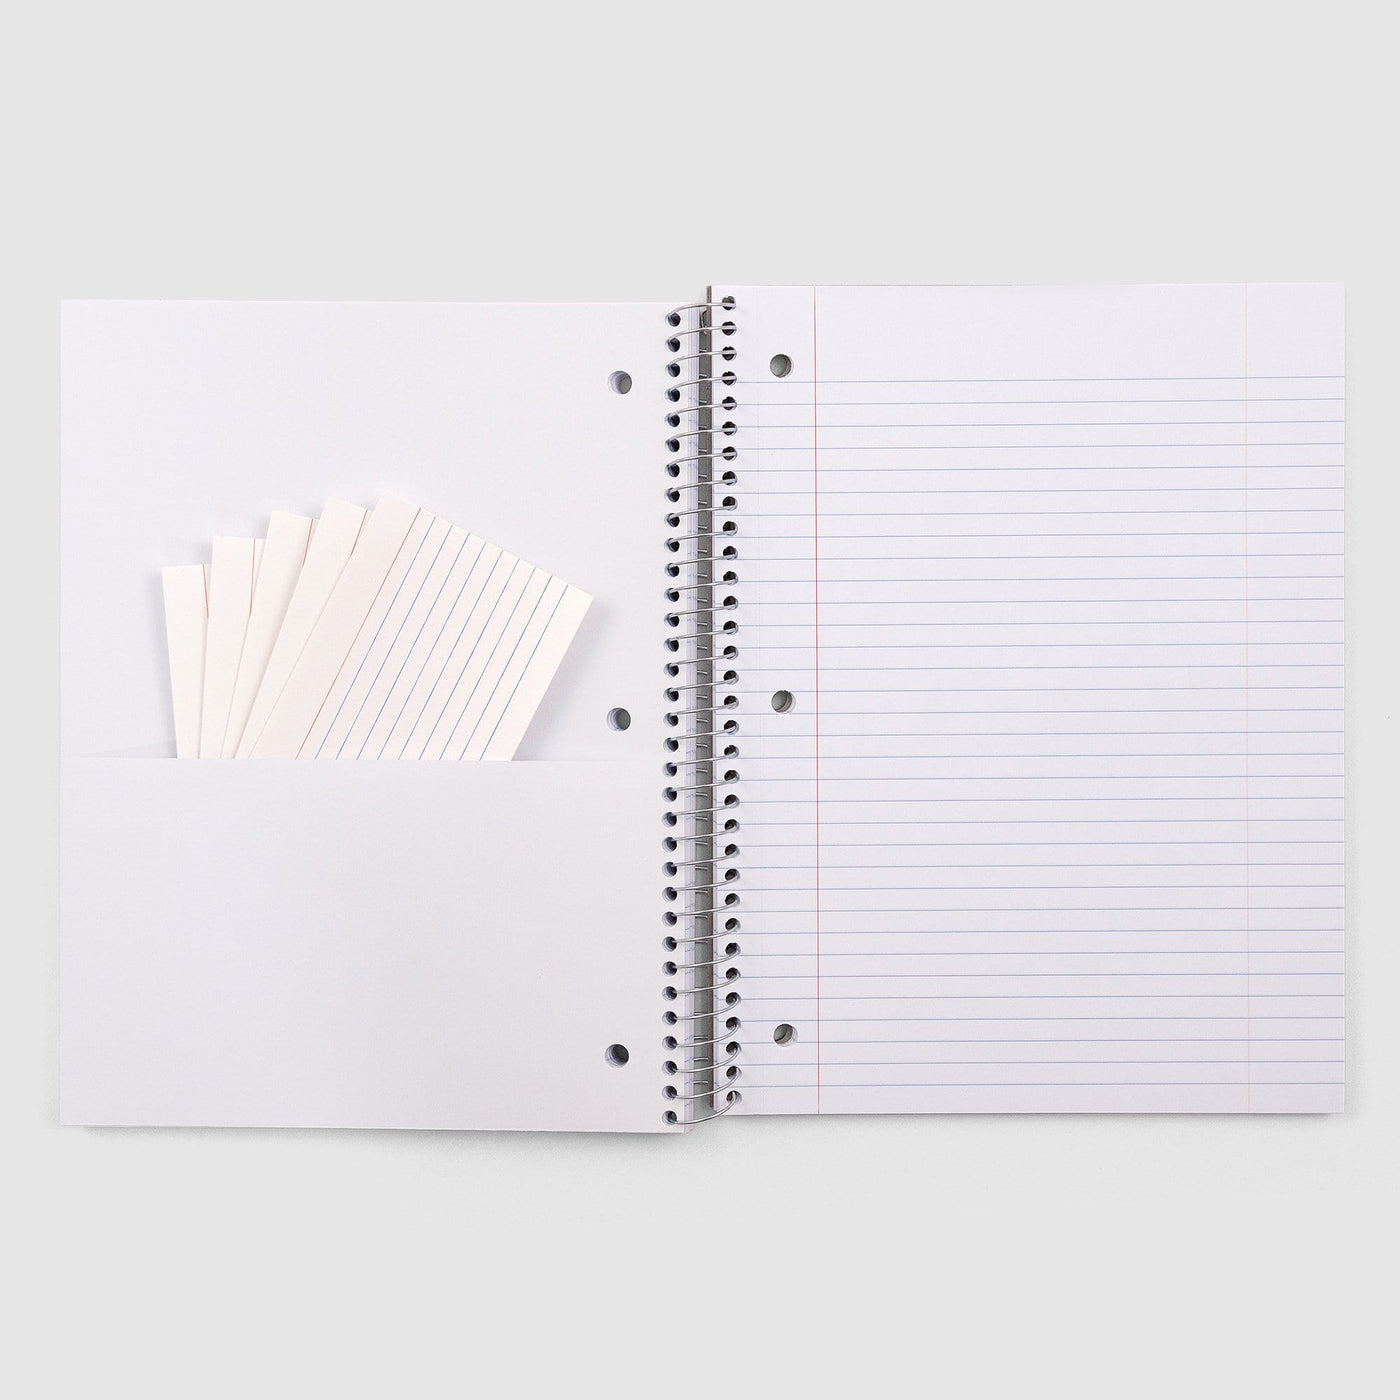  Yoobi College-Ruled Spiral Notebooks with Pencil Zipper  Pouches, Fun Green Avacado Print, Cute Rainbow Glitter, 2-Pack